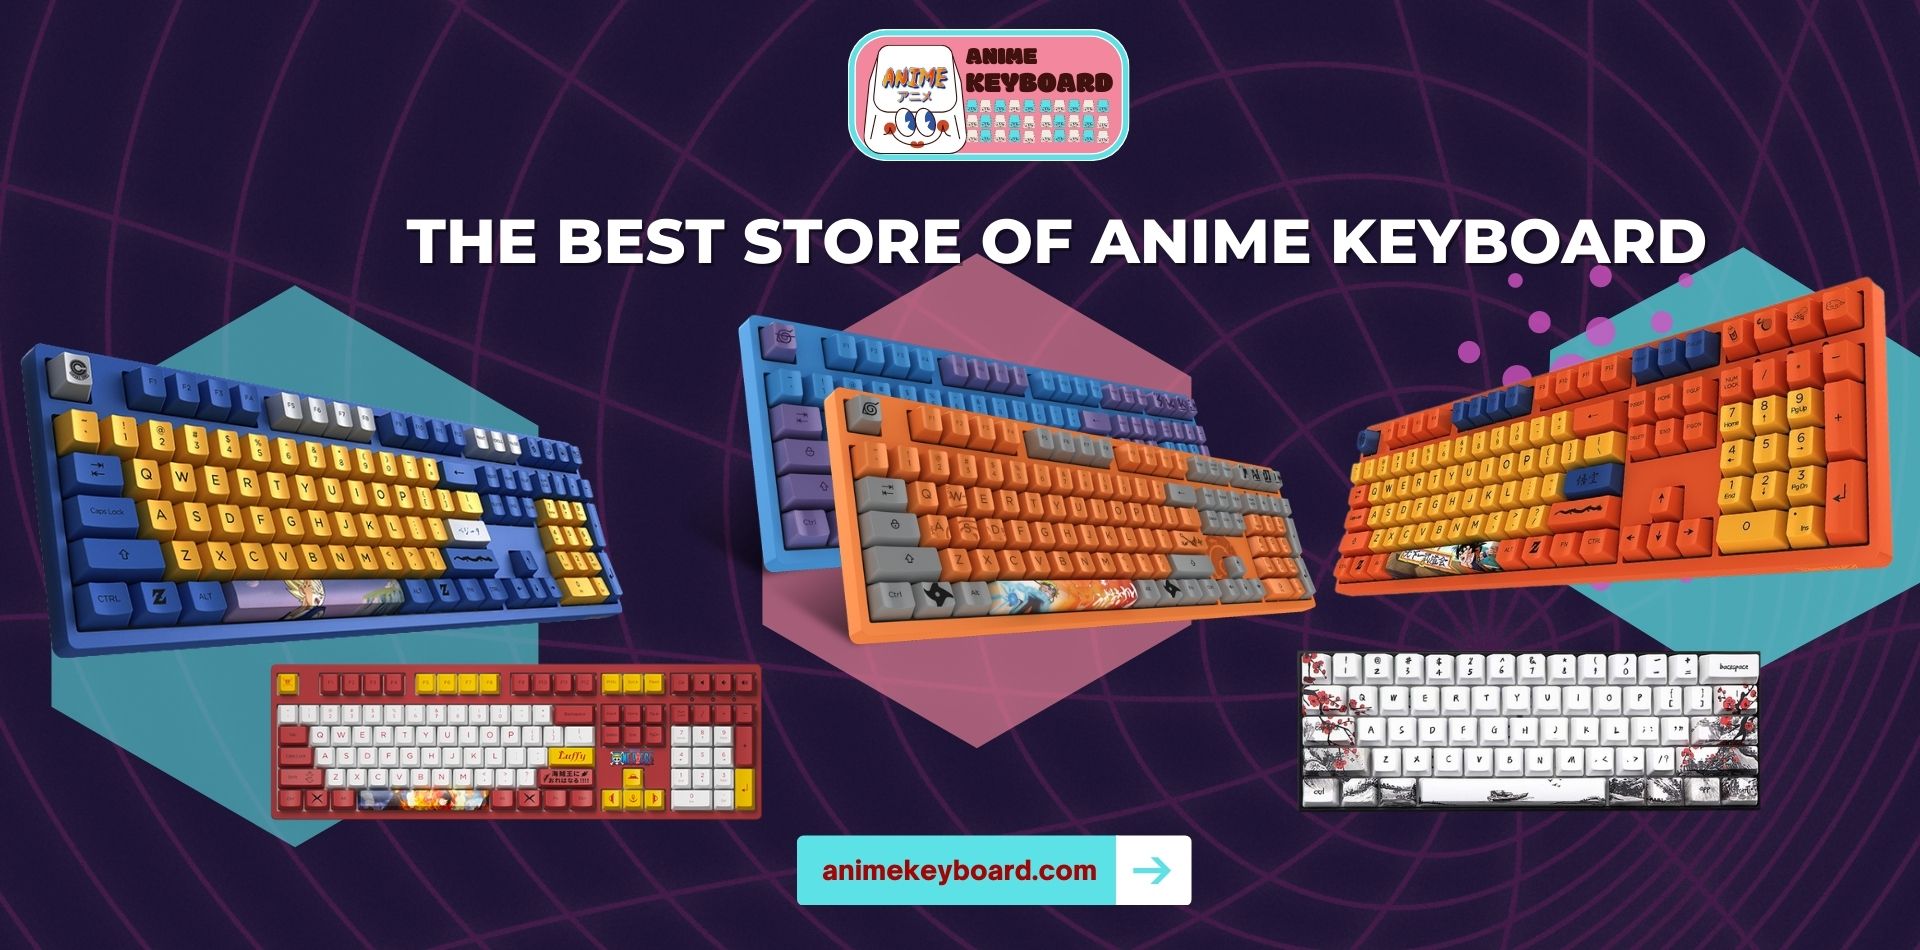 Anime Keyboard Web Banner - Anime Keyboard